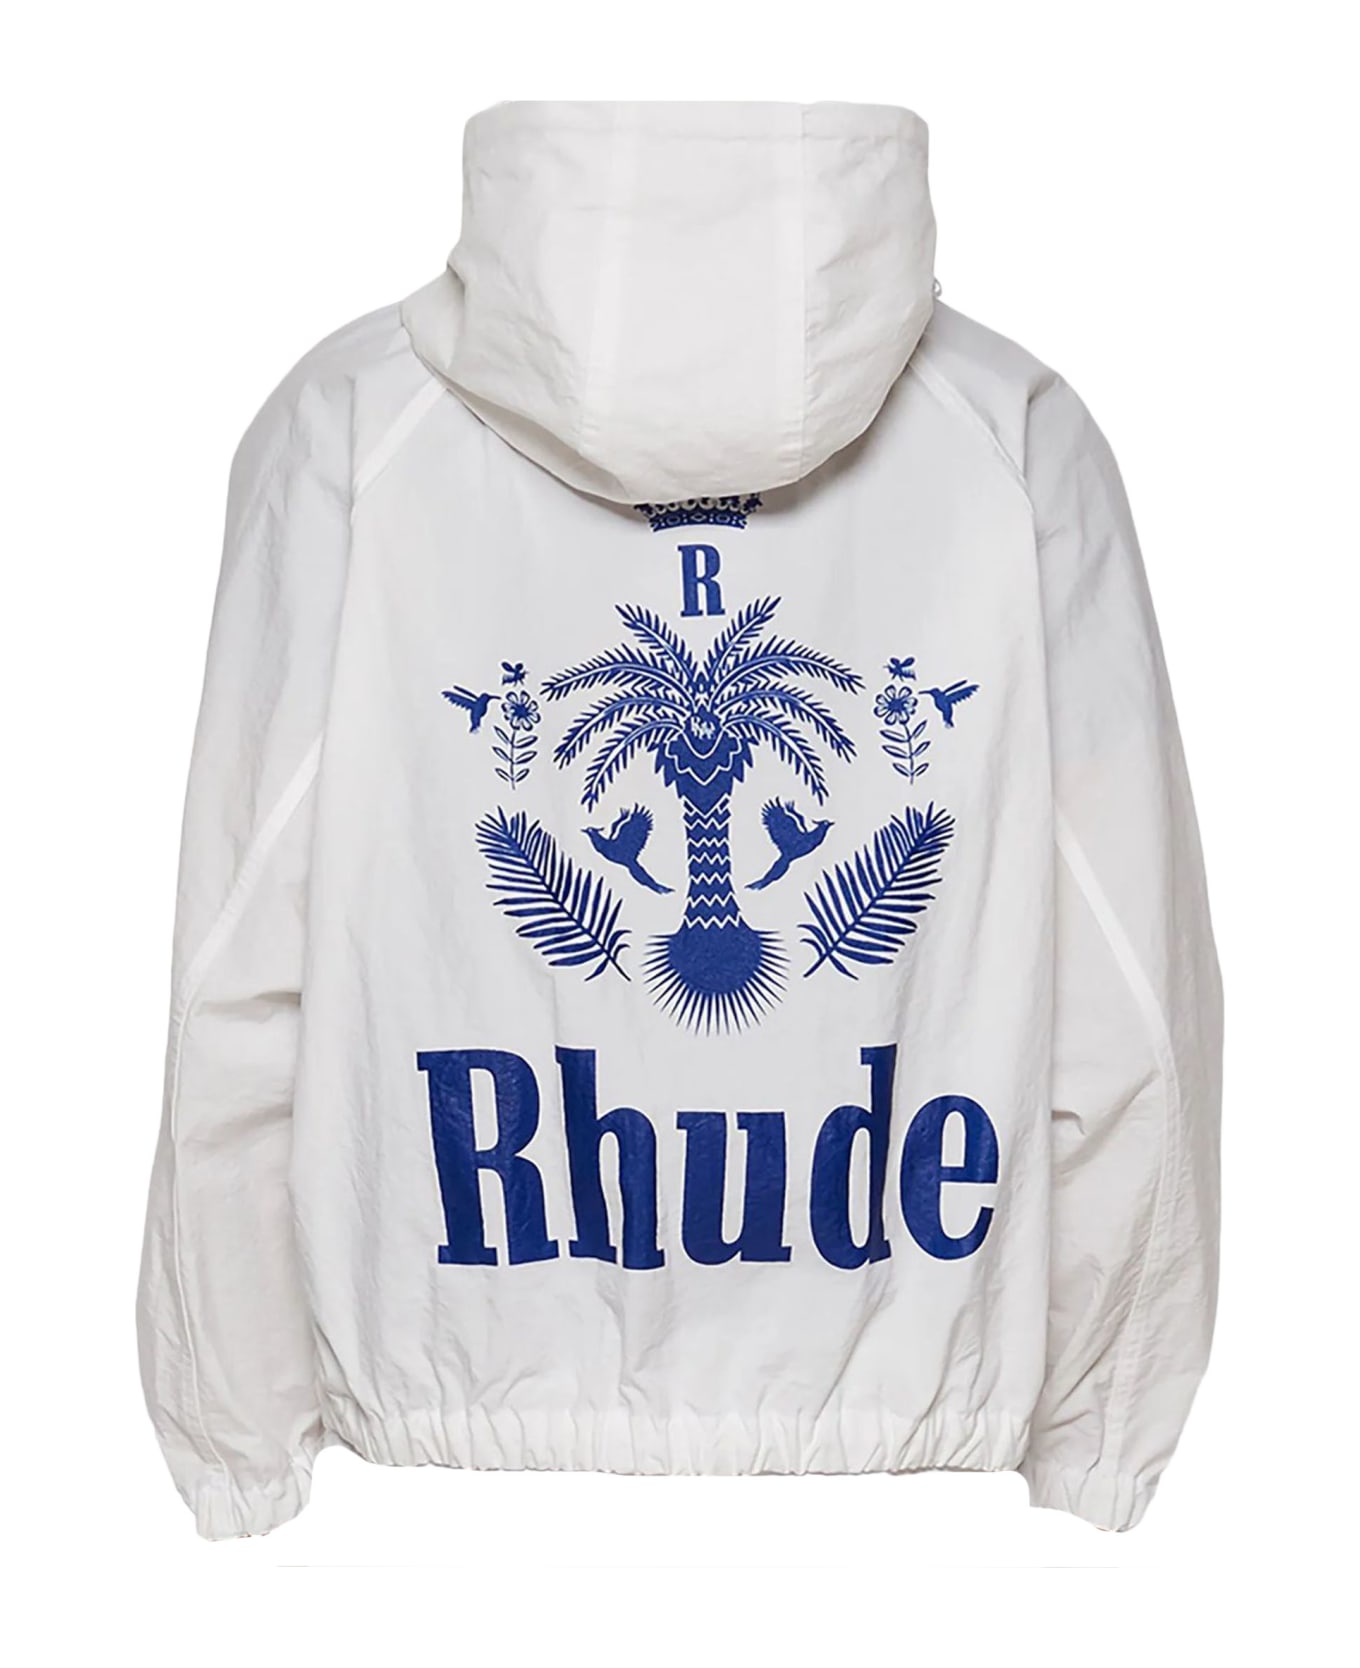 Rhude Coats White - White